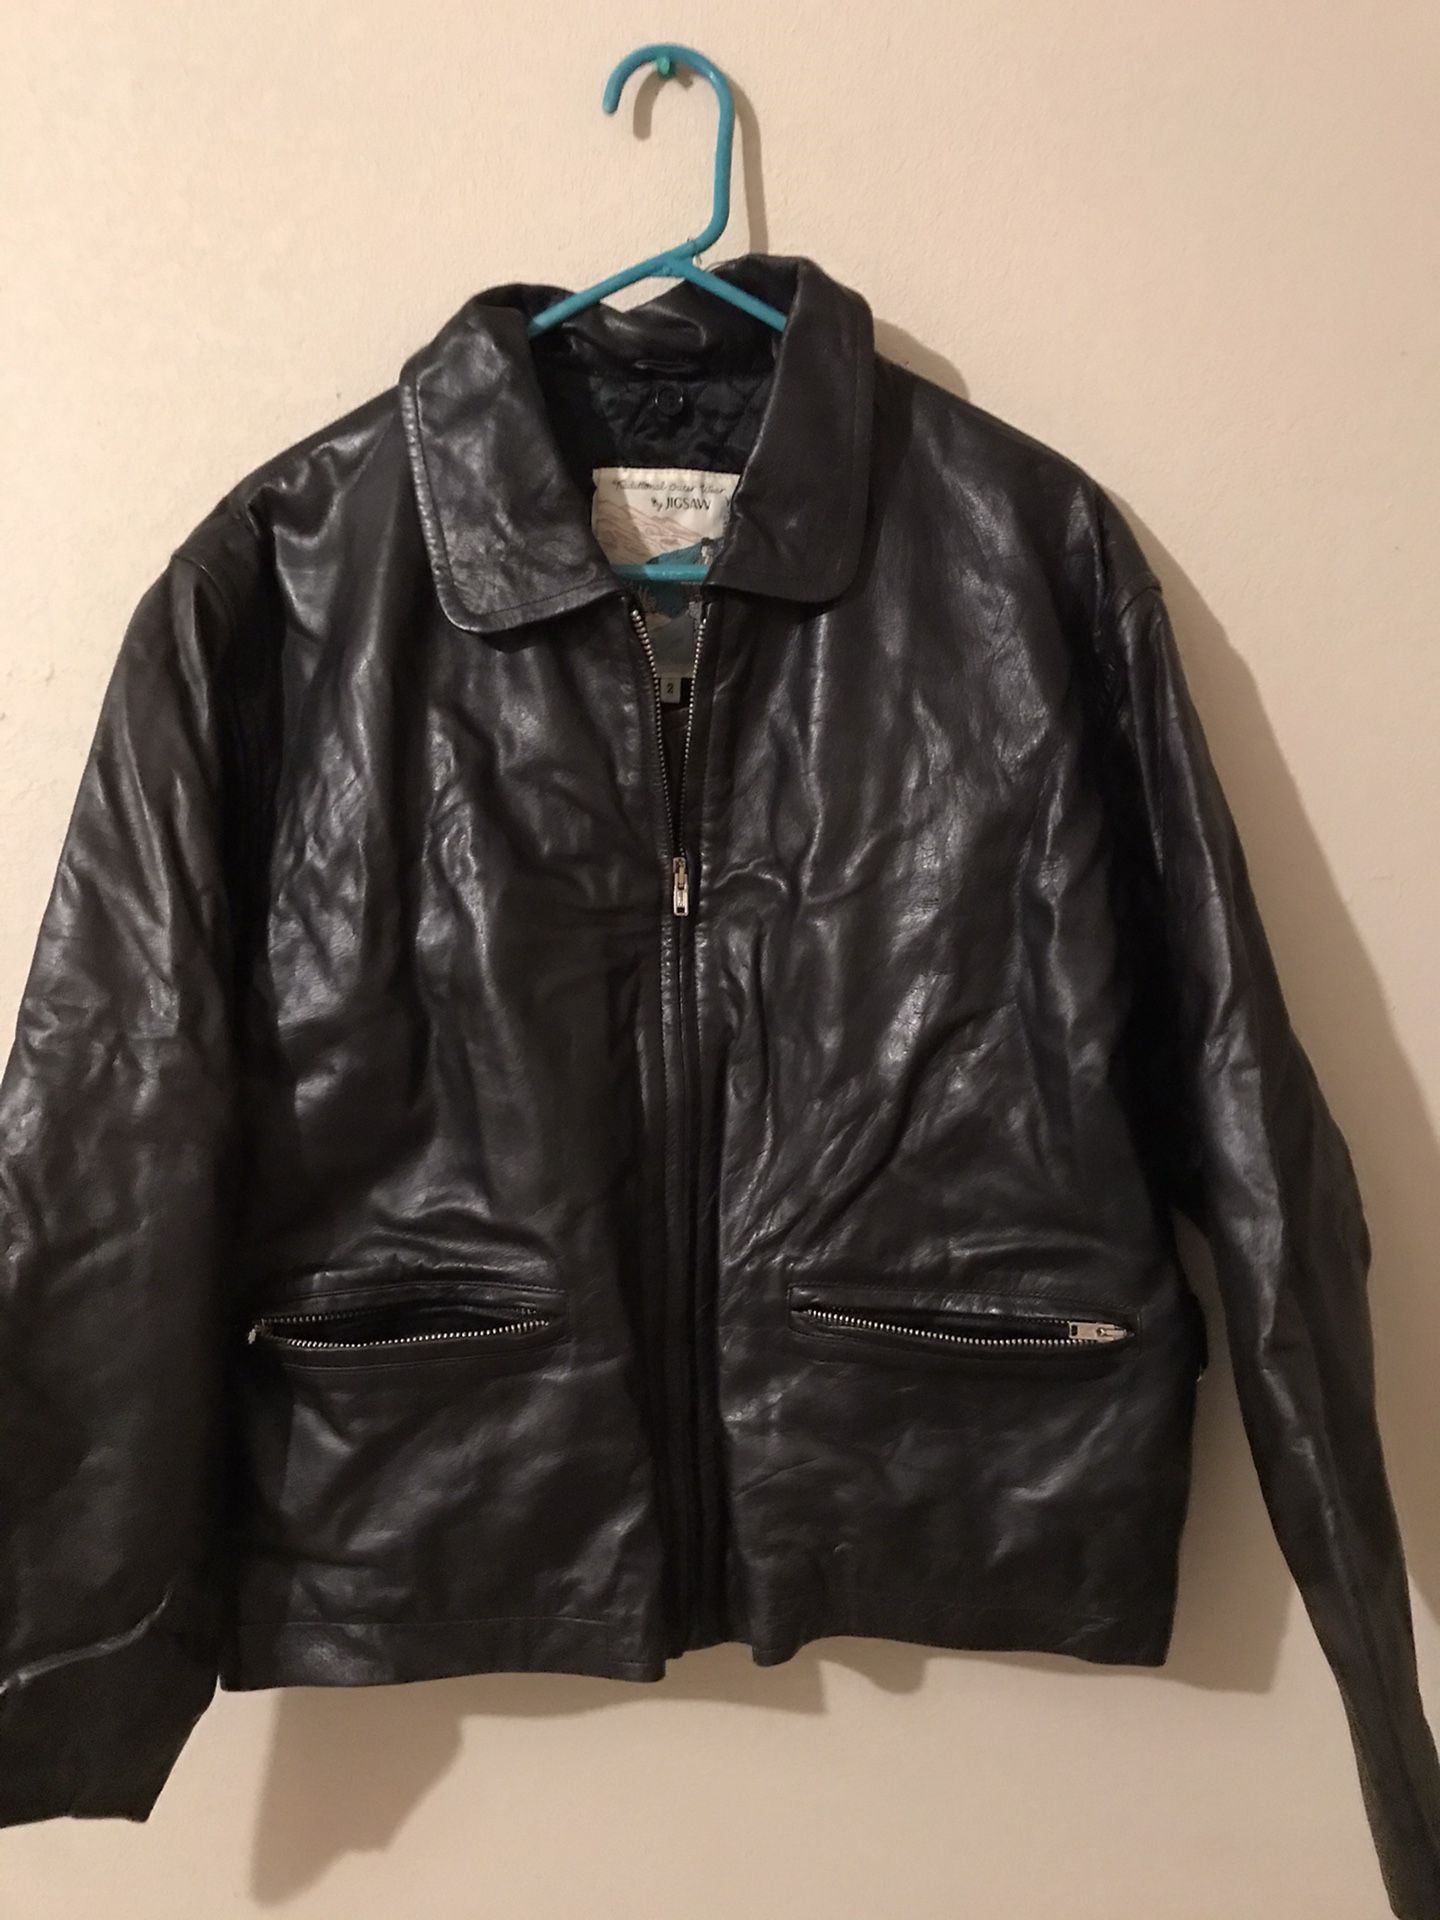 Vintage Jigsaw leather jacket